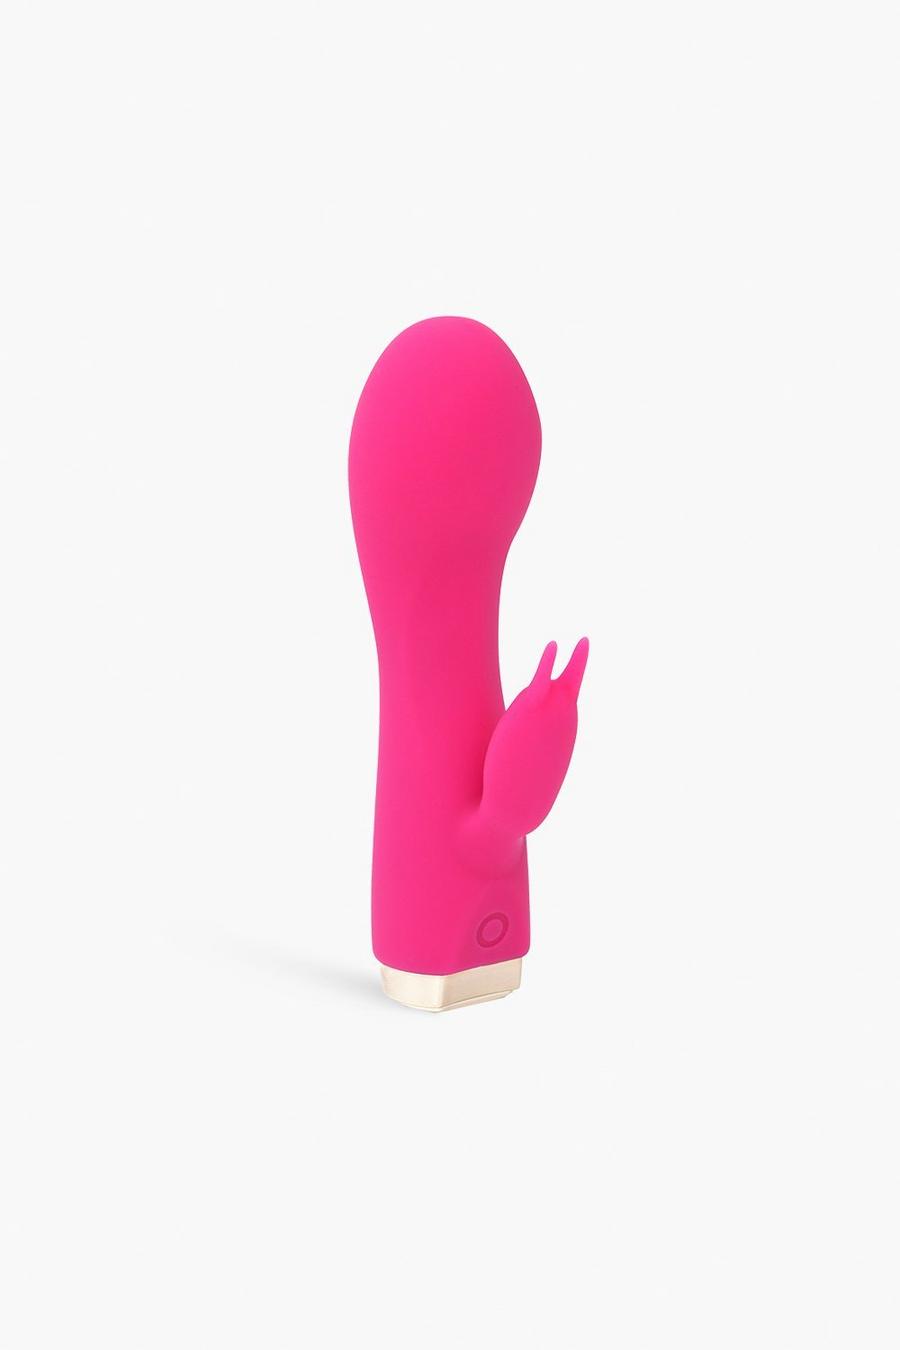 Skins - Mini vibromasseur - The Bijou Bunny, Pink